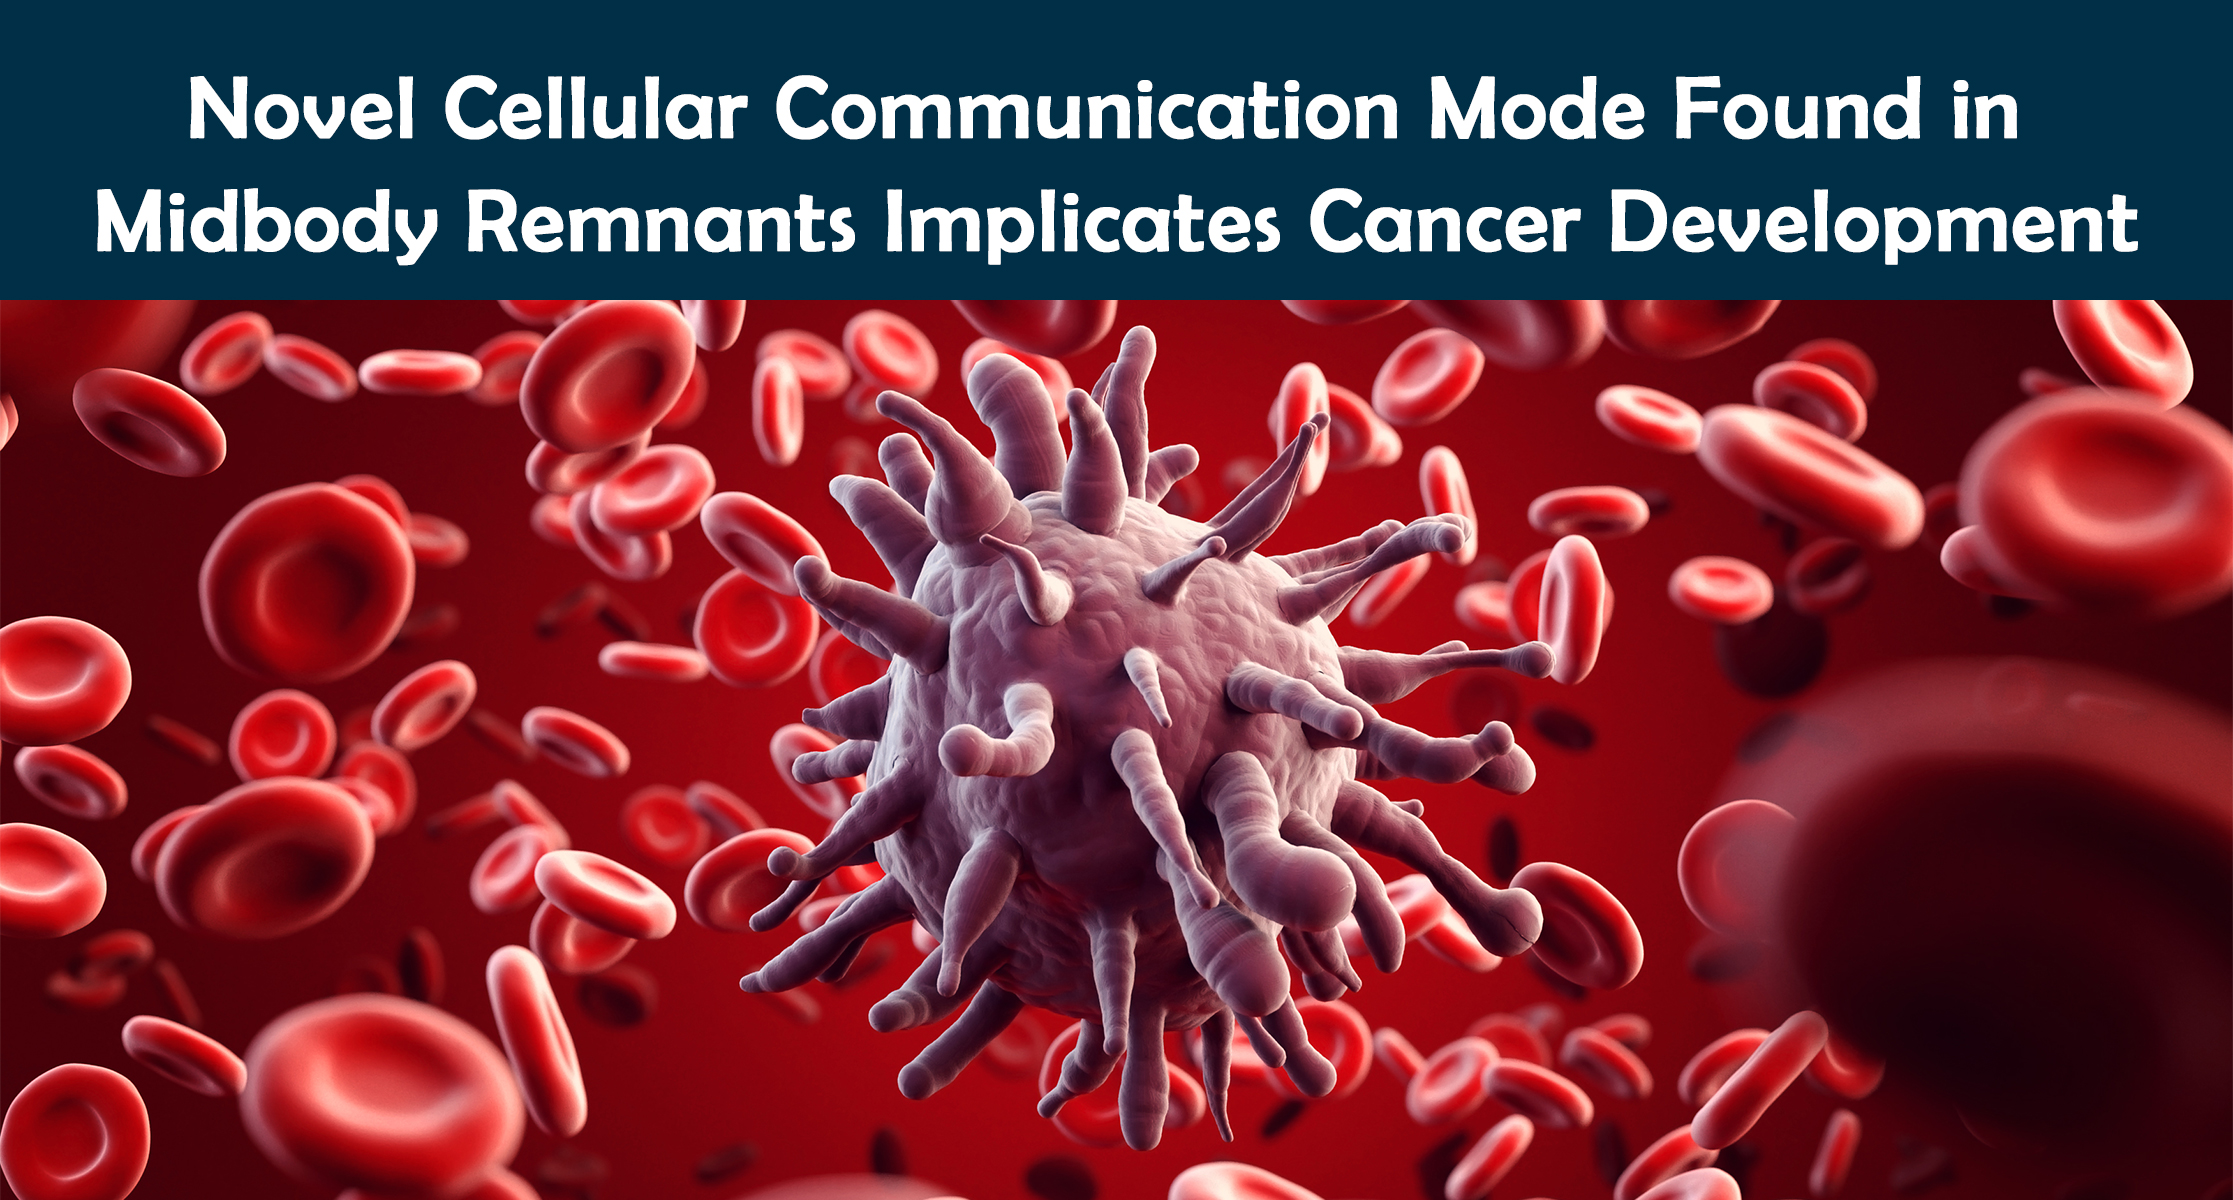 Novel Cellular Communication Mode Found in Midbody Remnants Implicates Cancer Development